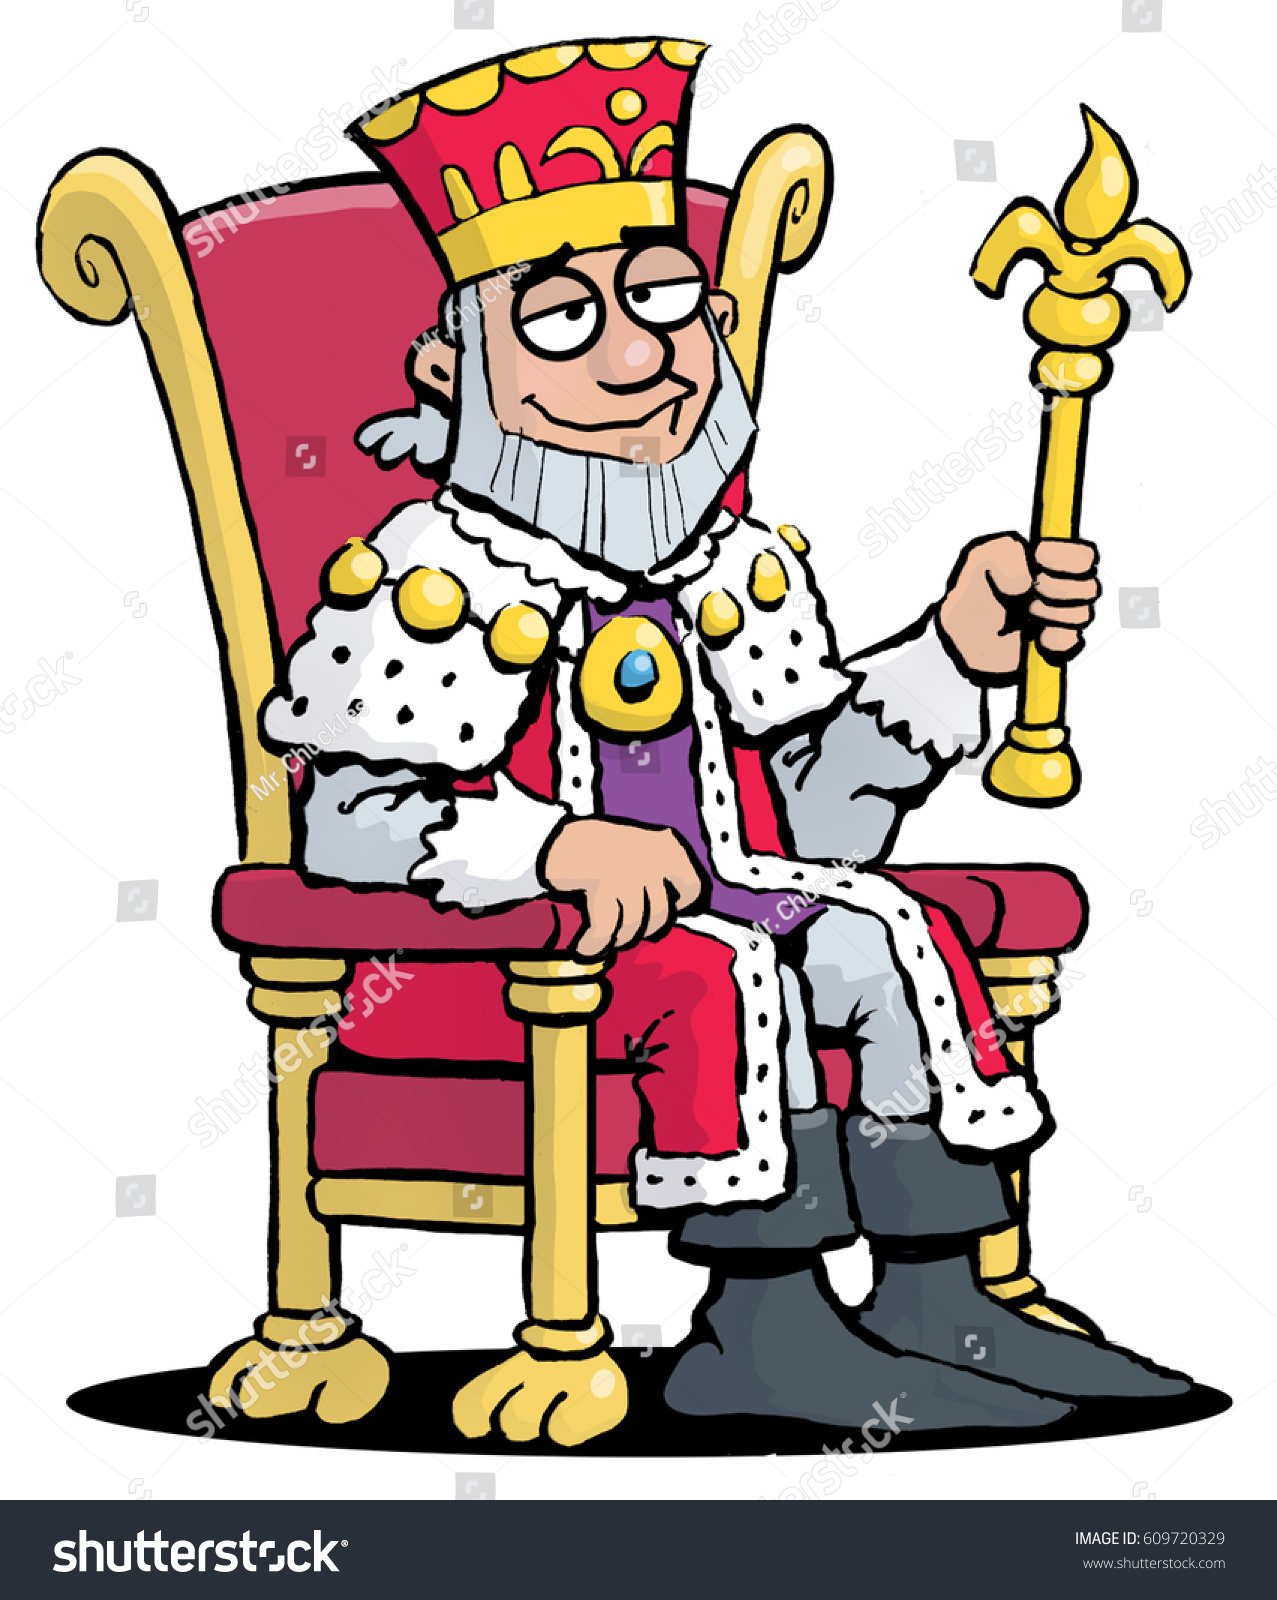 Cartoon Illustration King Sitting On Throne: стоковая иллюстрация, 60972032...